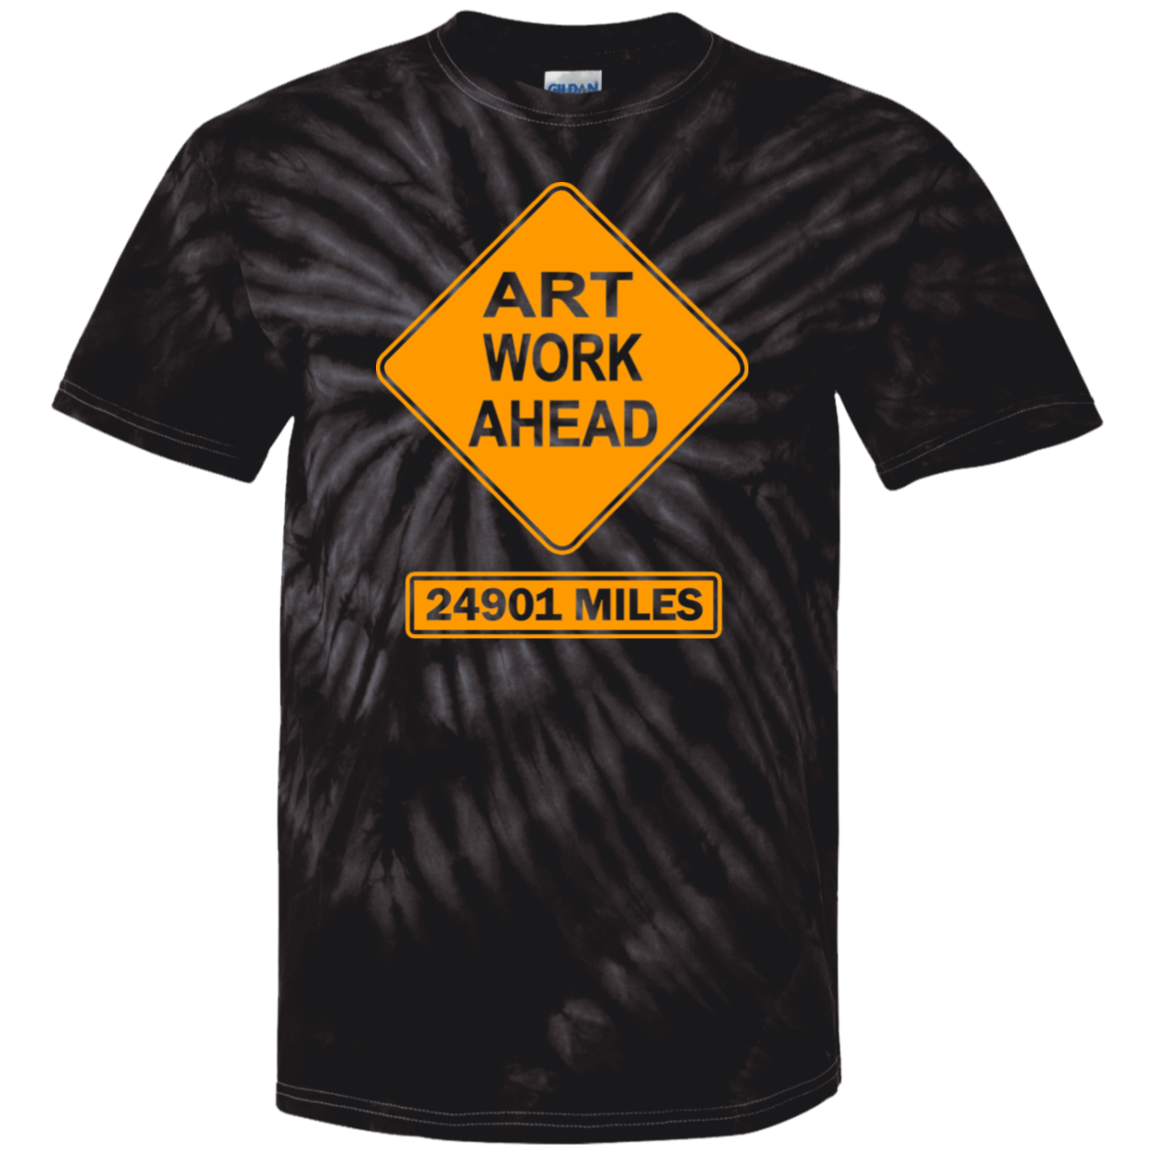 ArtichokeUSA Custom Design. Art Work Ahead. 24,901 Miles (Miles Around the Earth). 100% Cotton Tie Dye T-Shirt